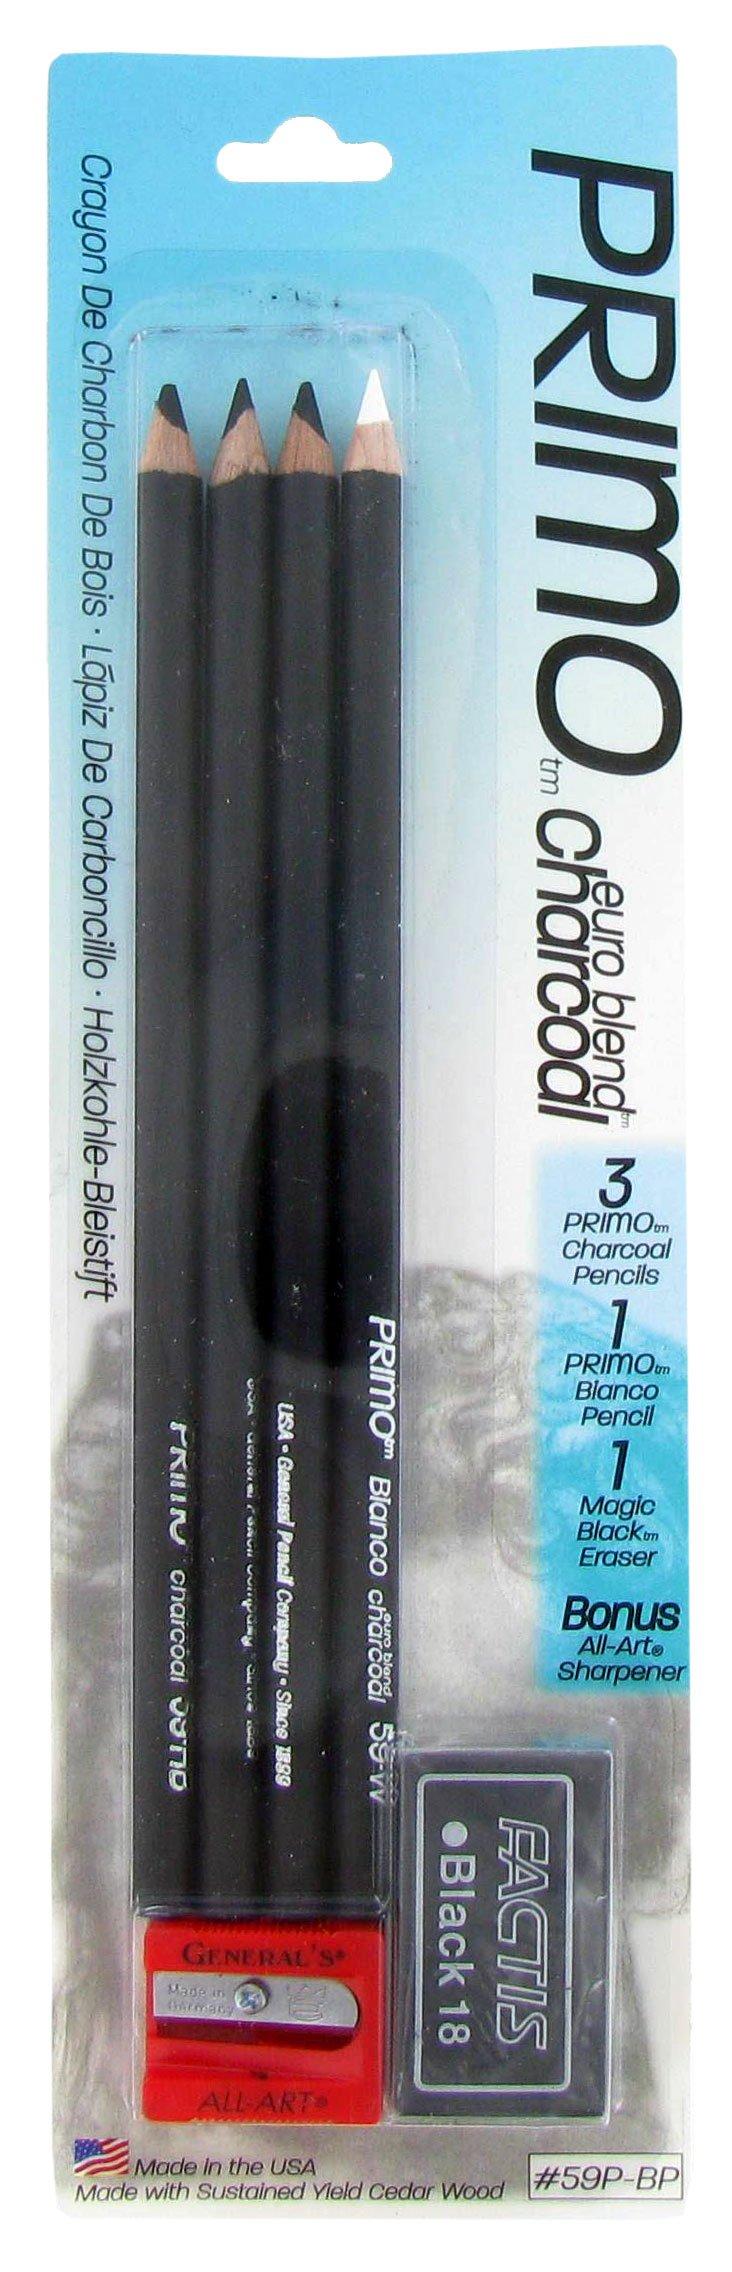 Primo Euro Blend Compressed Charcoal Sticks